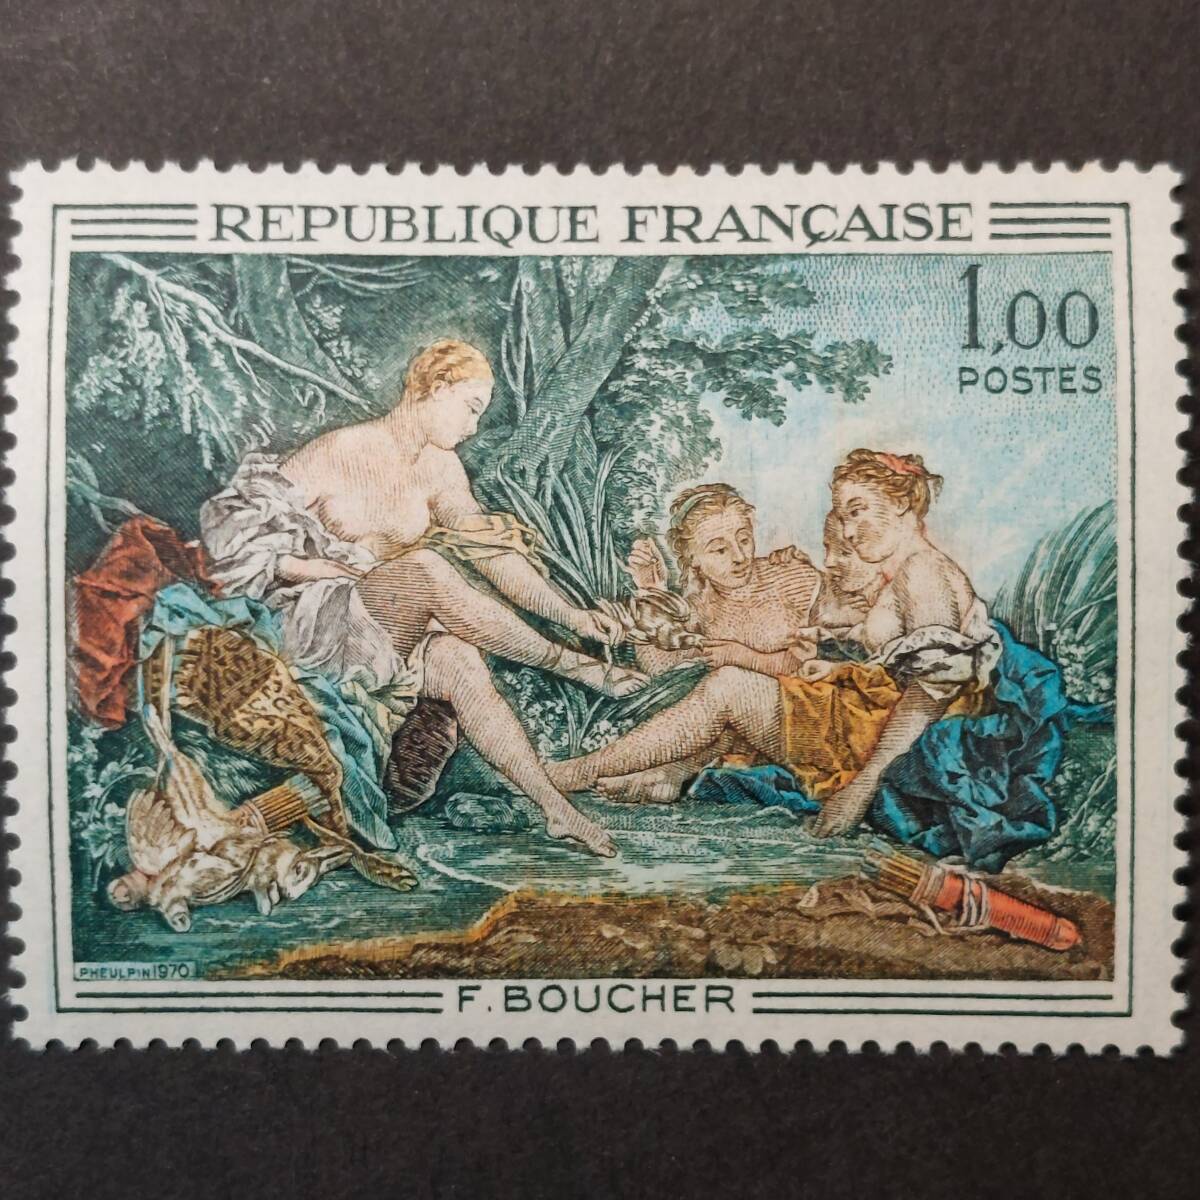 J591 フランス切手 美術切手「盛期ロココ時代の巨匠フランソワ・ブーシェ作『狩りから帰るディアナ（コニャック美術館）』」1970年 未使用_画像1